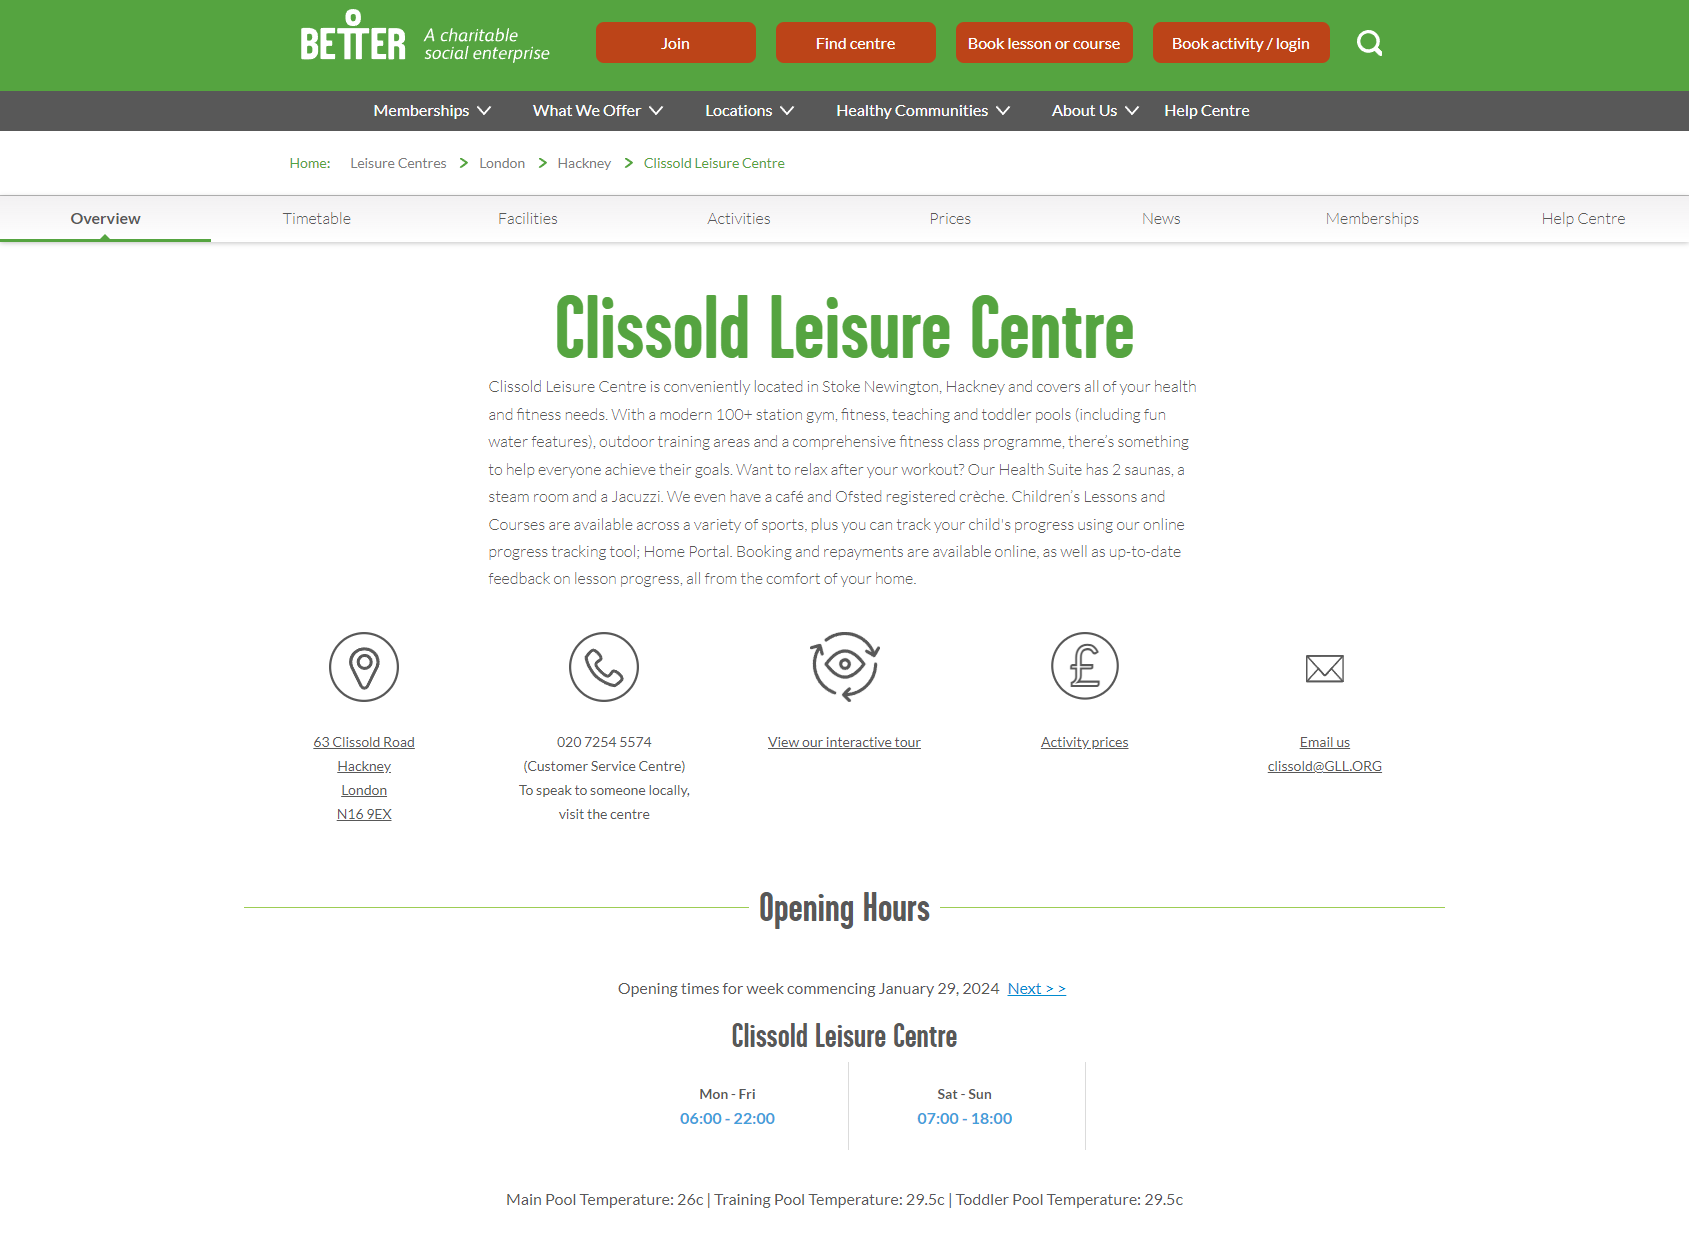 Clissold Leisure Centre